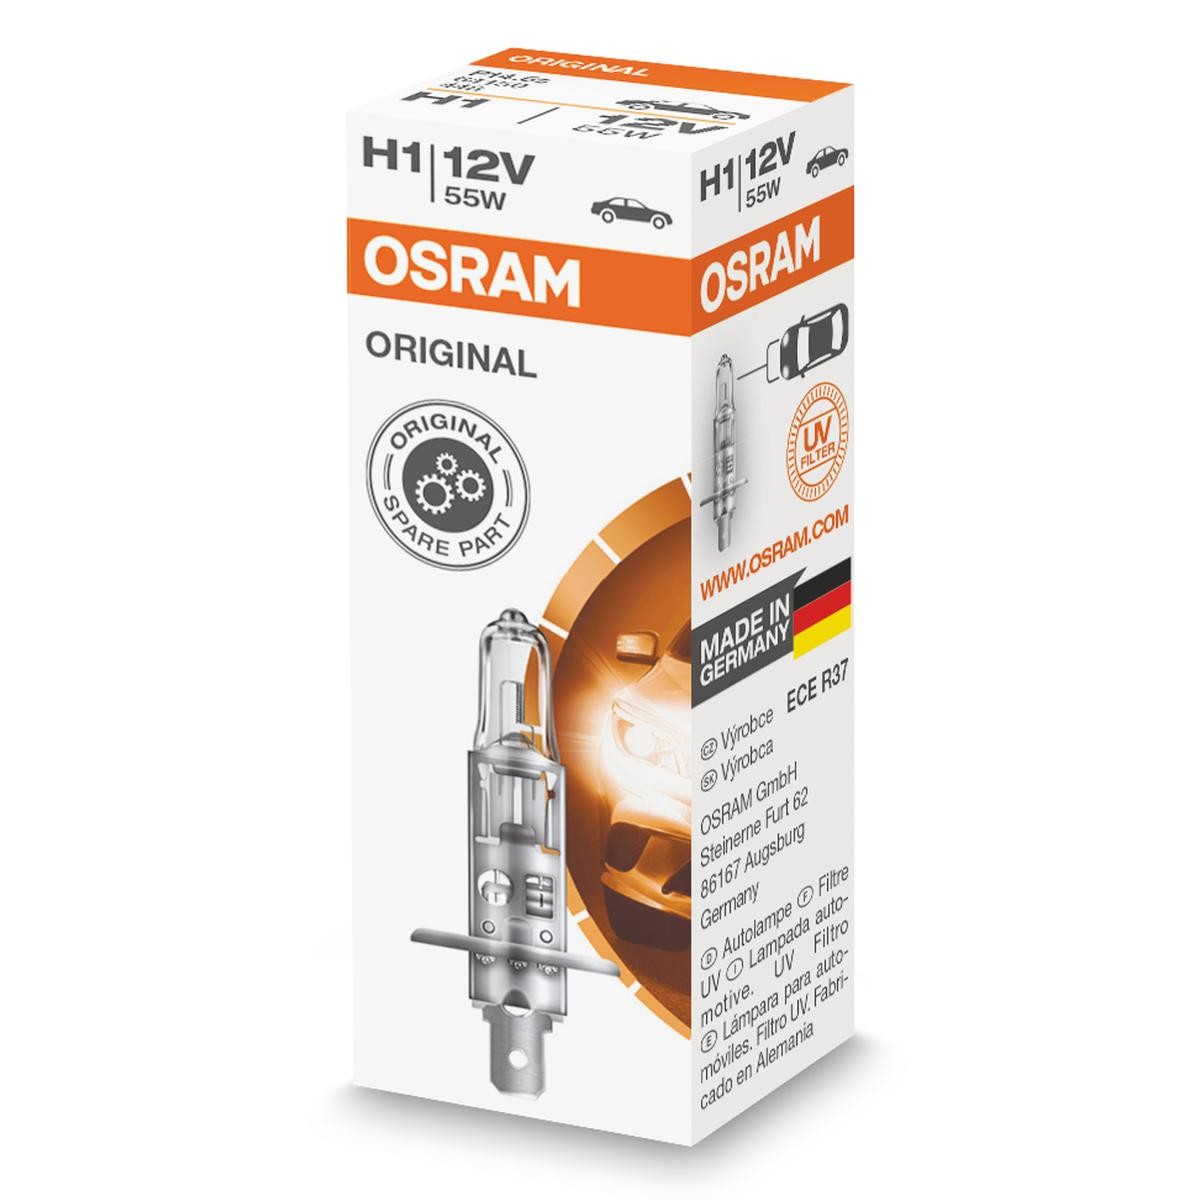 Škoda dele af original kvalitet 
H1 OSRAM 64150